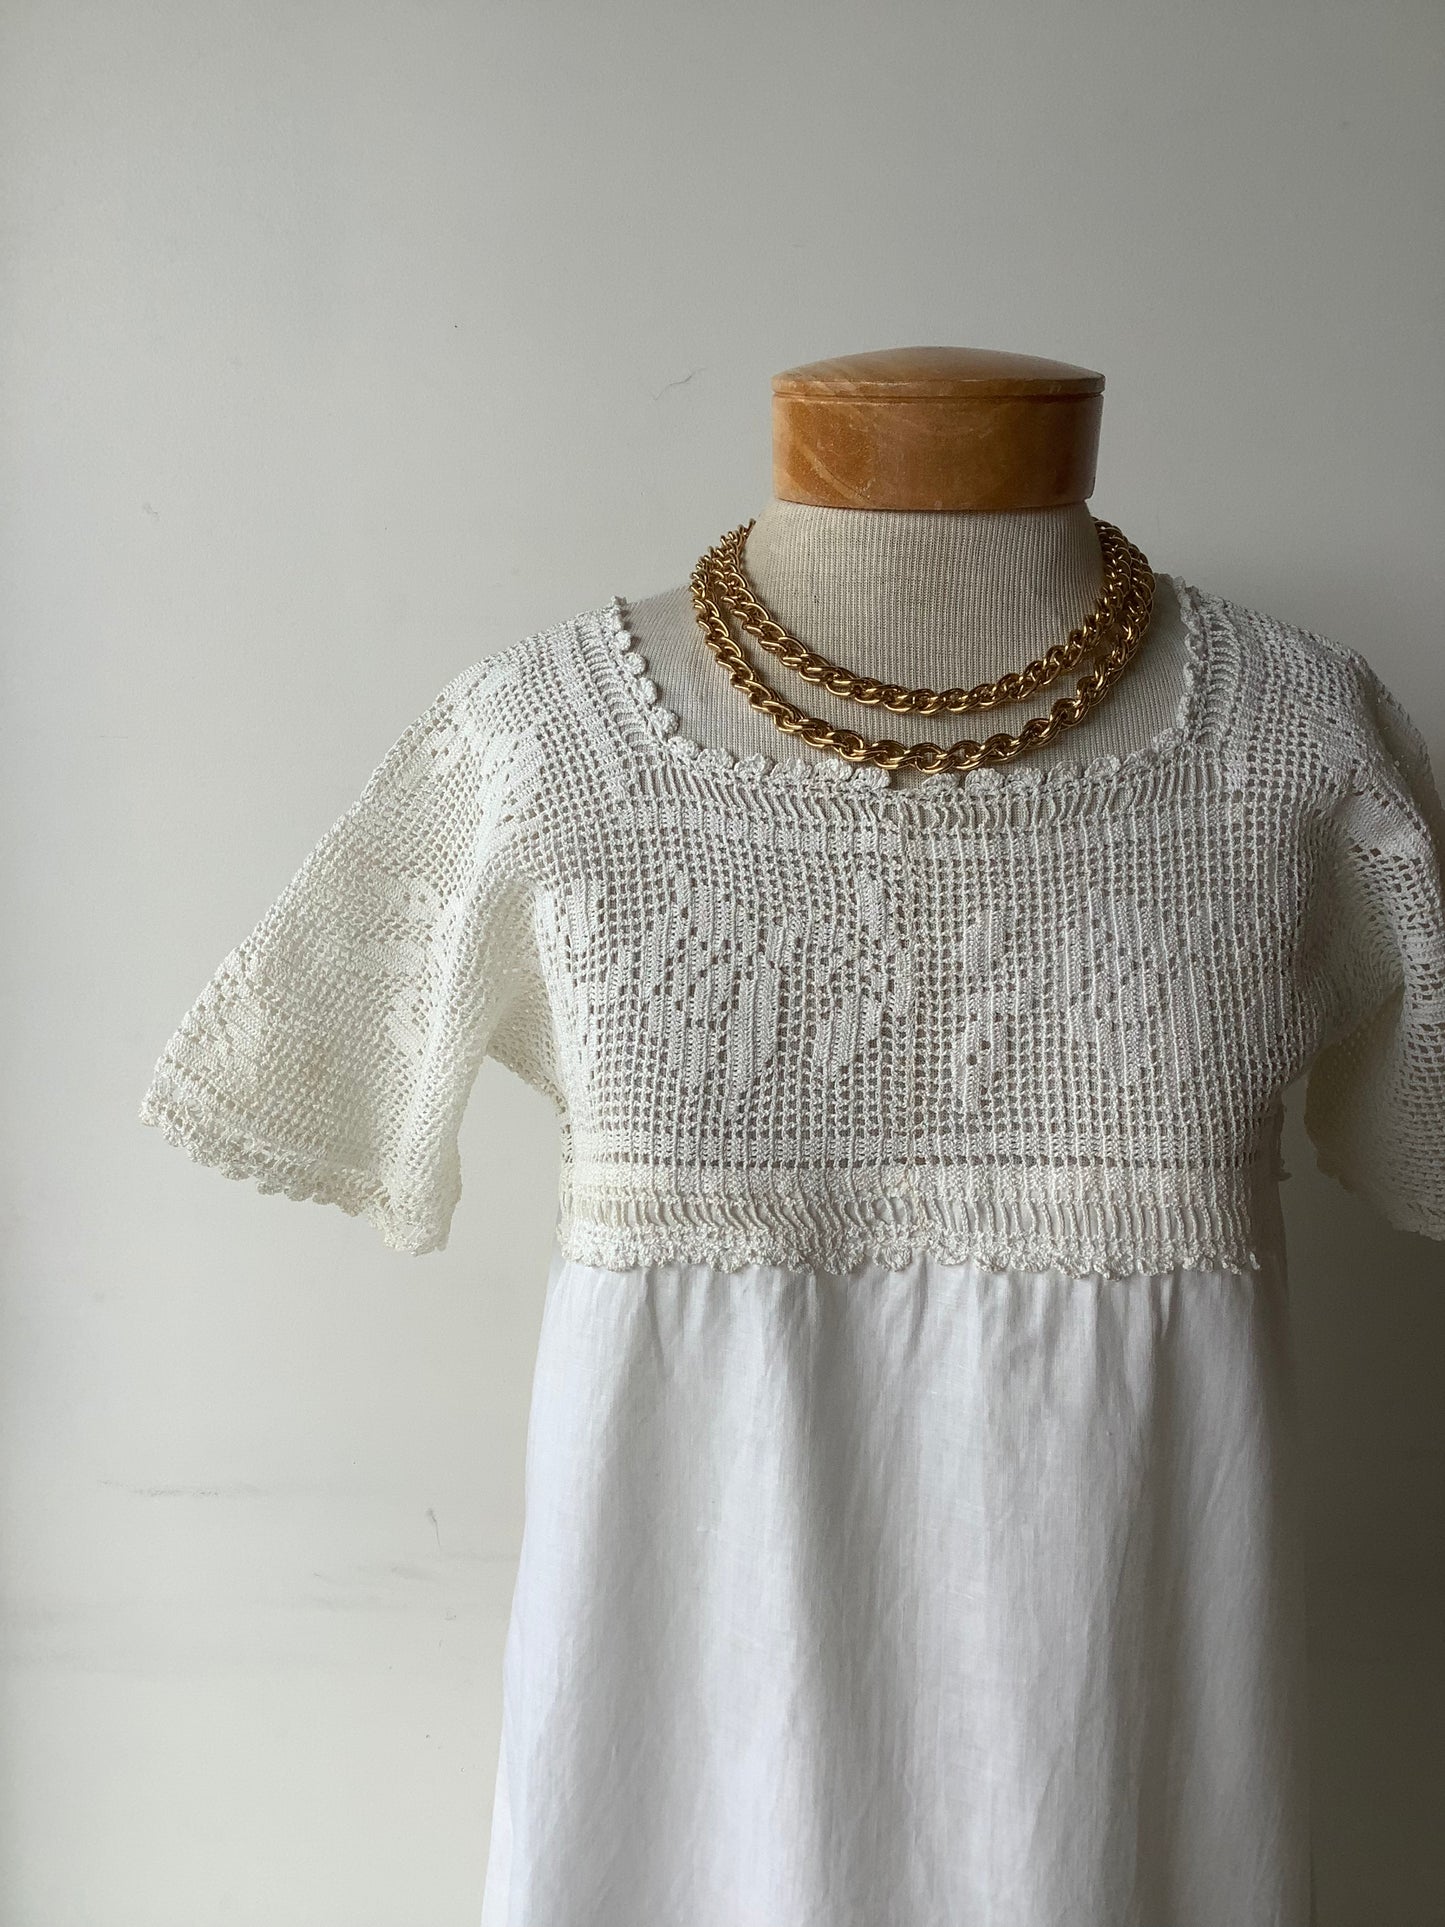 Antique cotton crochet nightgown